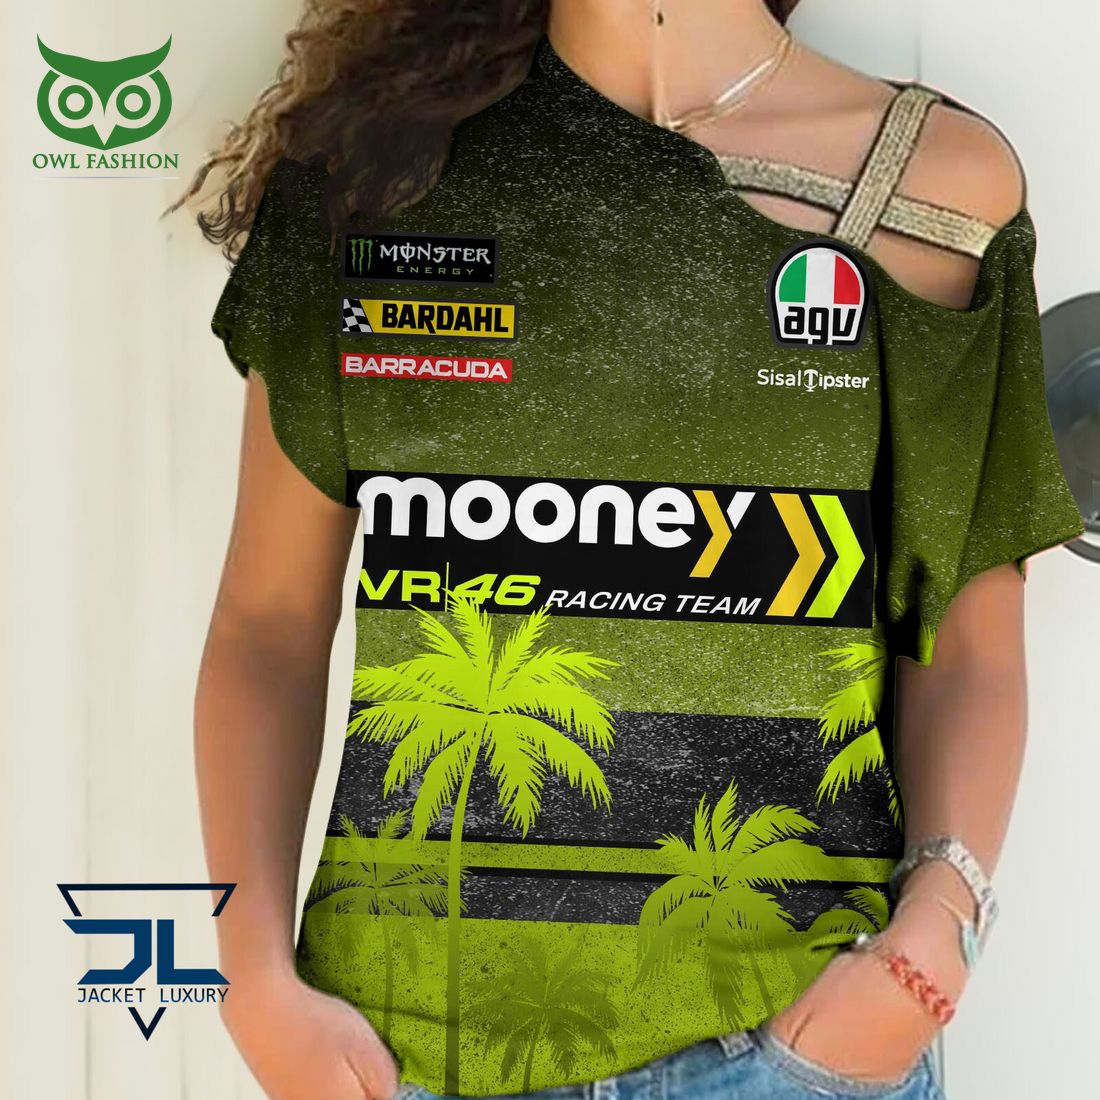 mooney vr46 racing team grand prix motogp racing hawaiian shirt 10 qlGUF.jpg